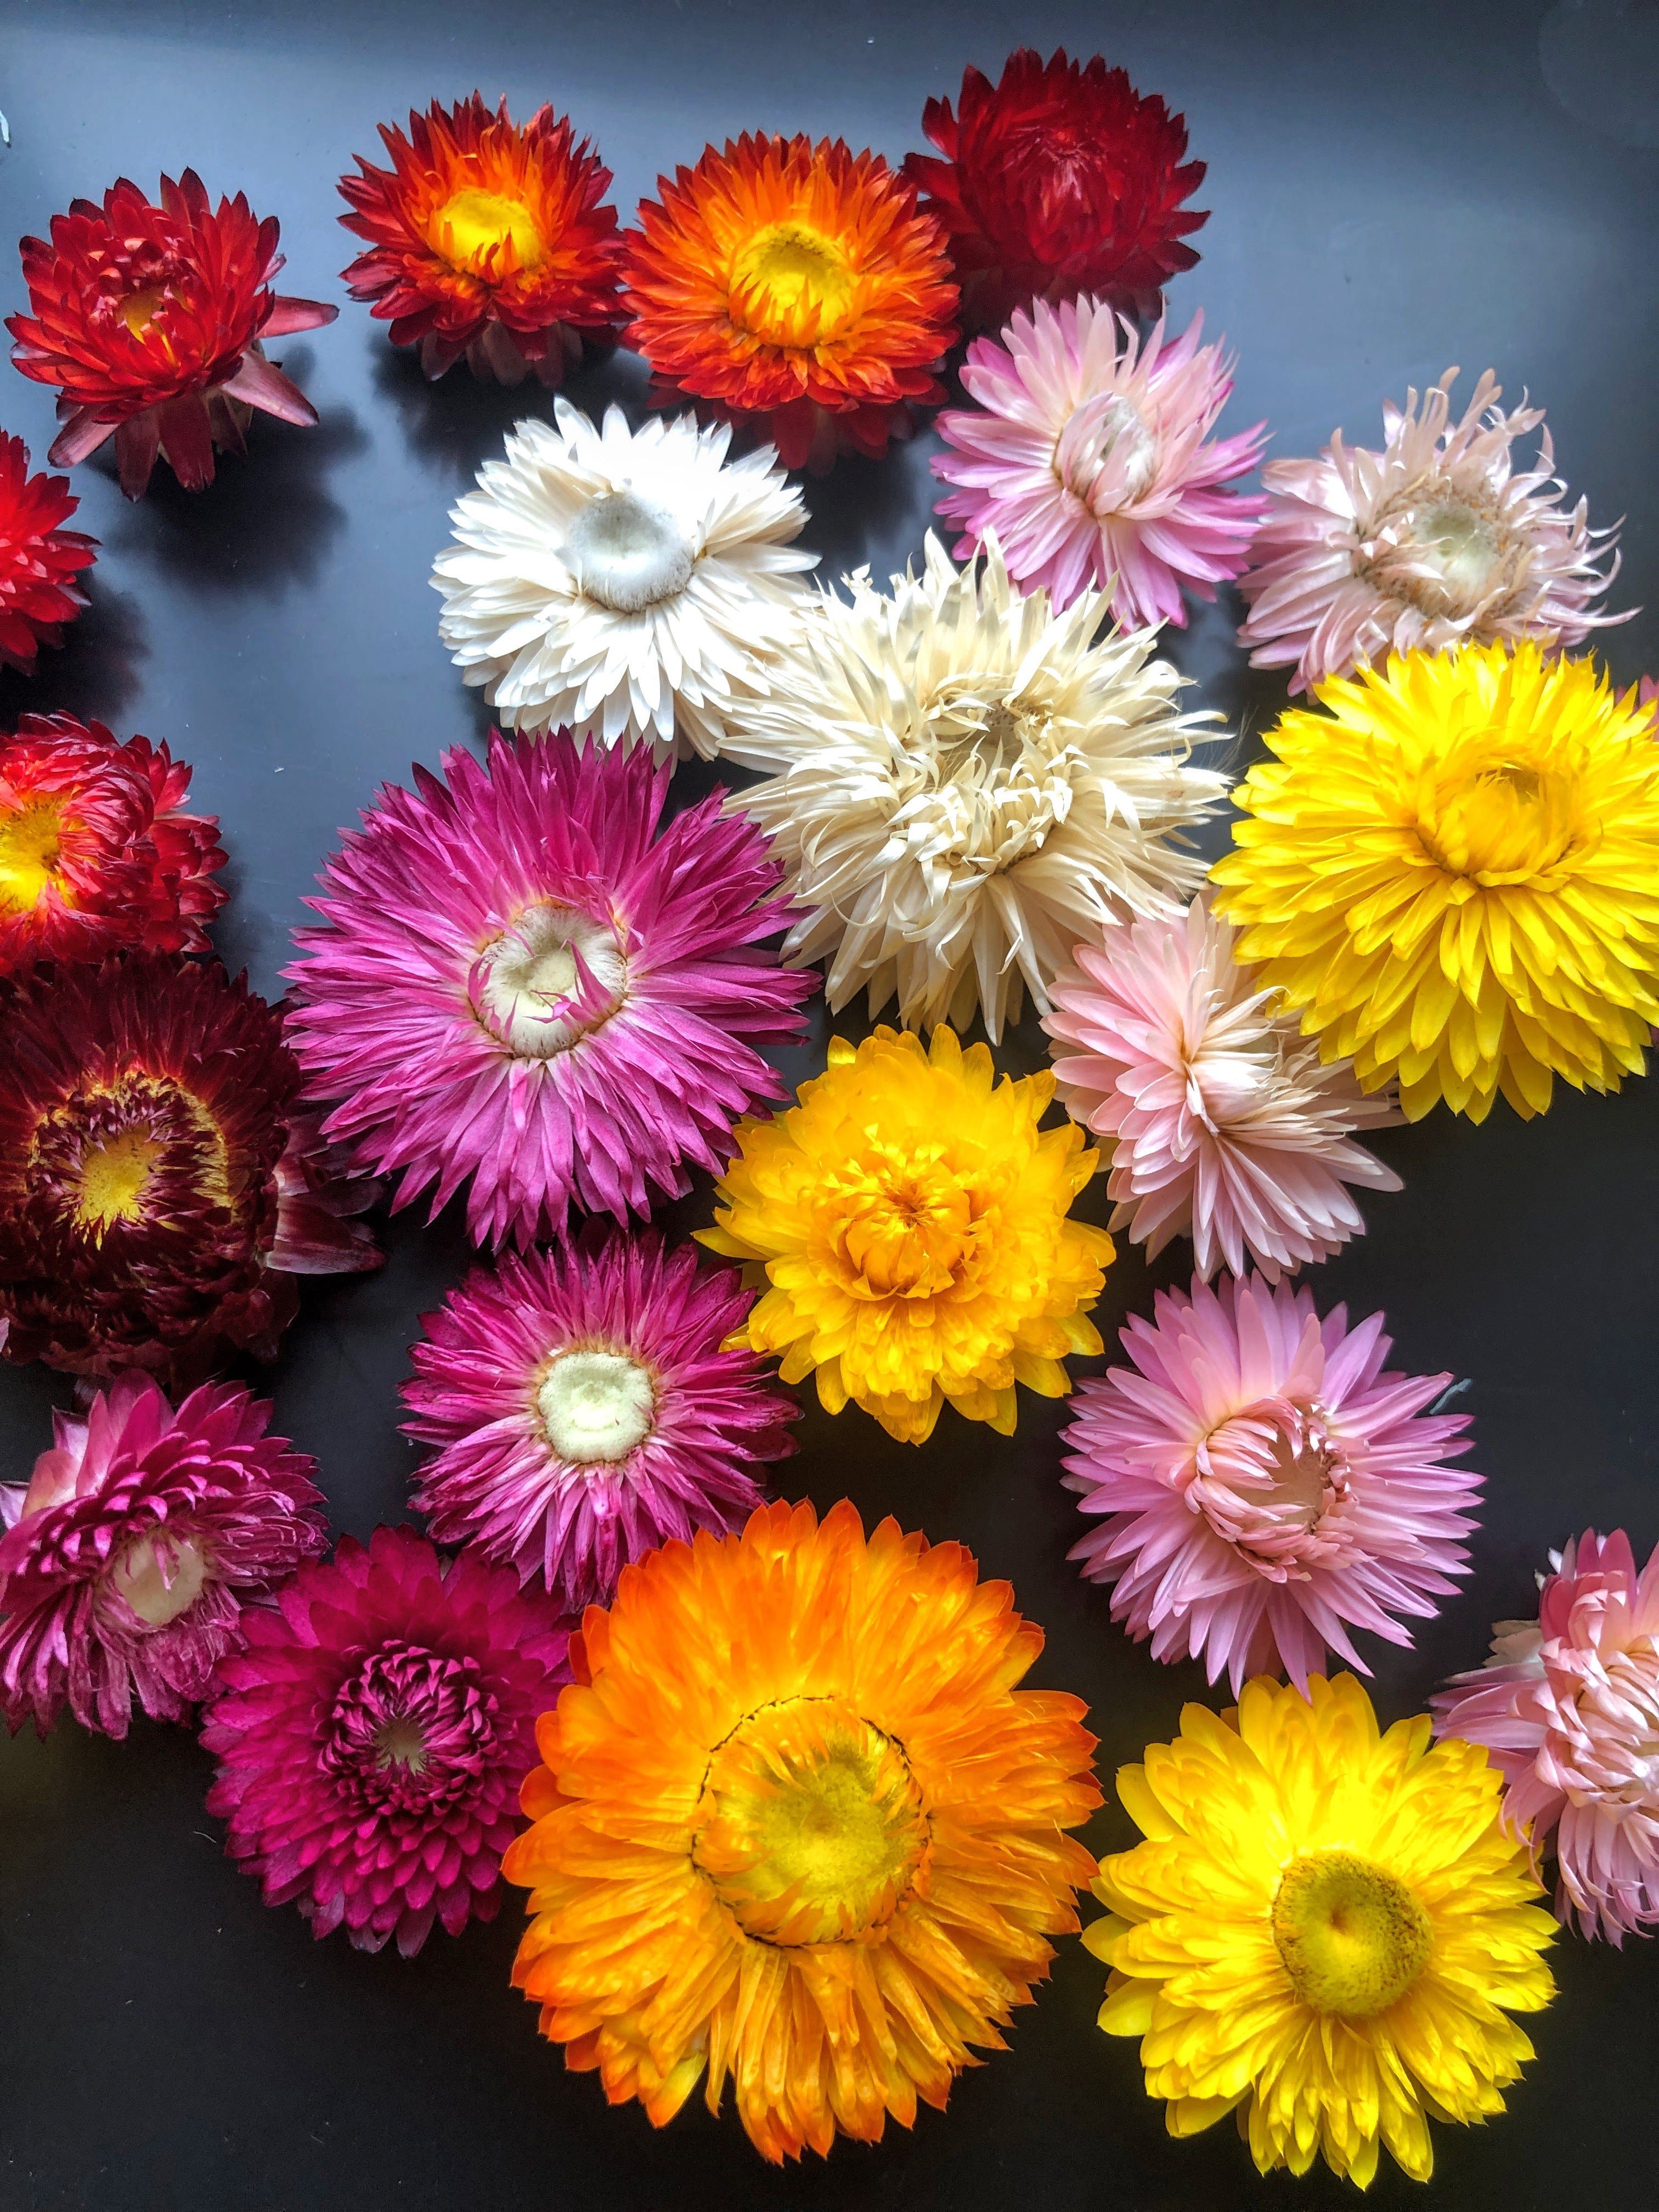 gemischt Strohblumenköpfe sortiert getrocknet: Lila, Kunstharz.Art Trockenblume Helichrysum farblich - oder